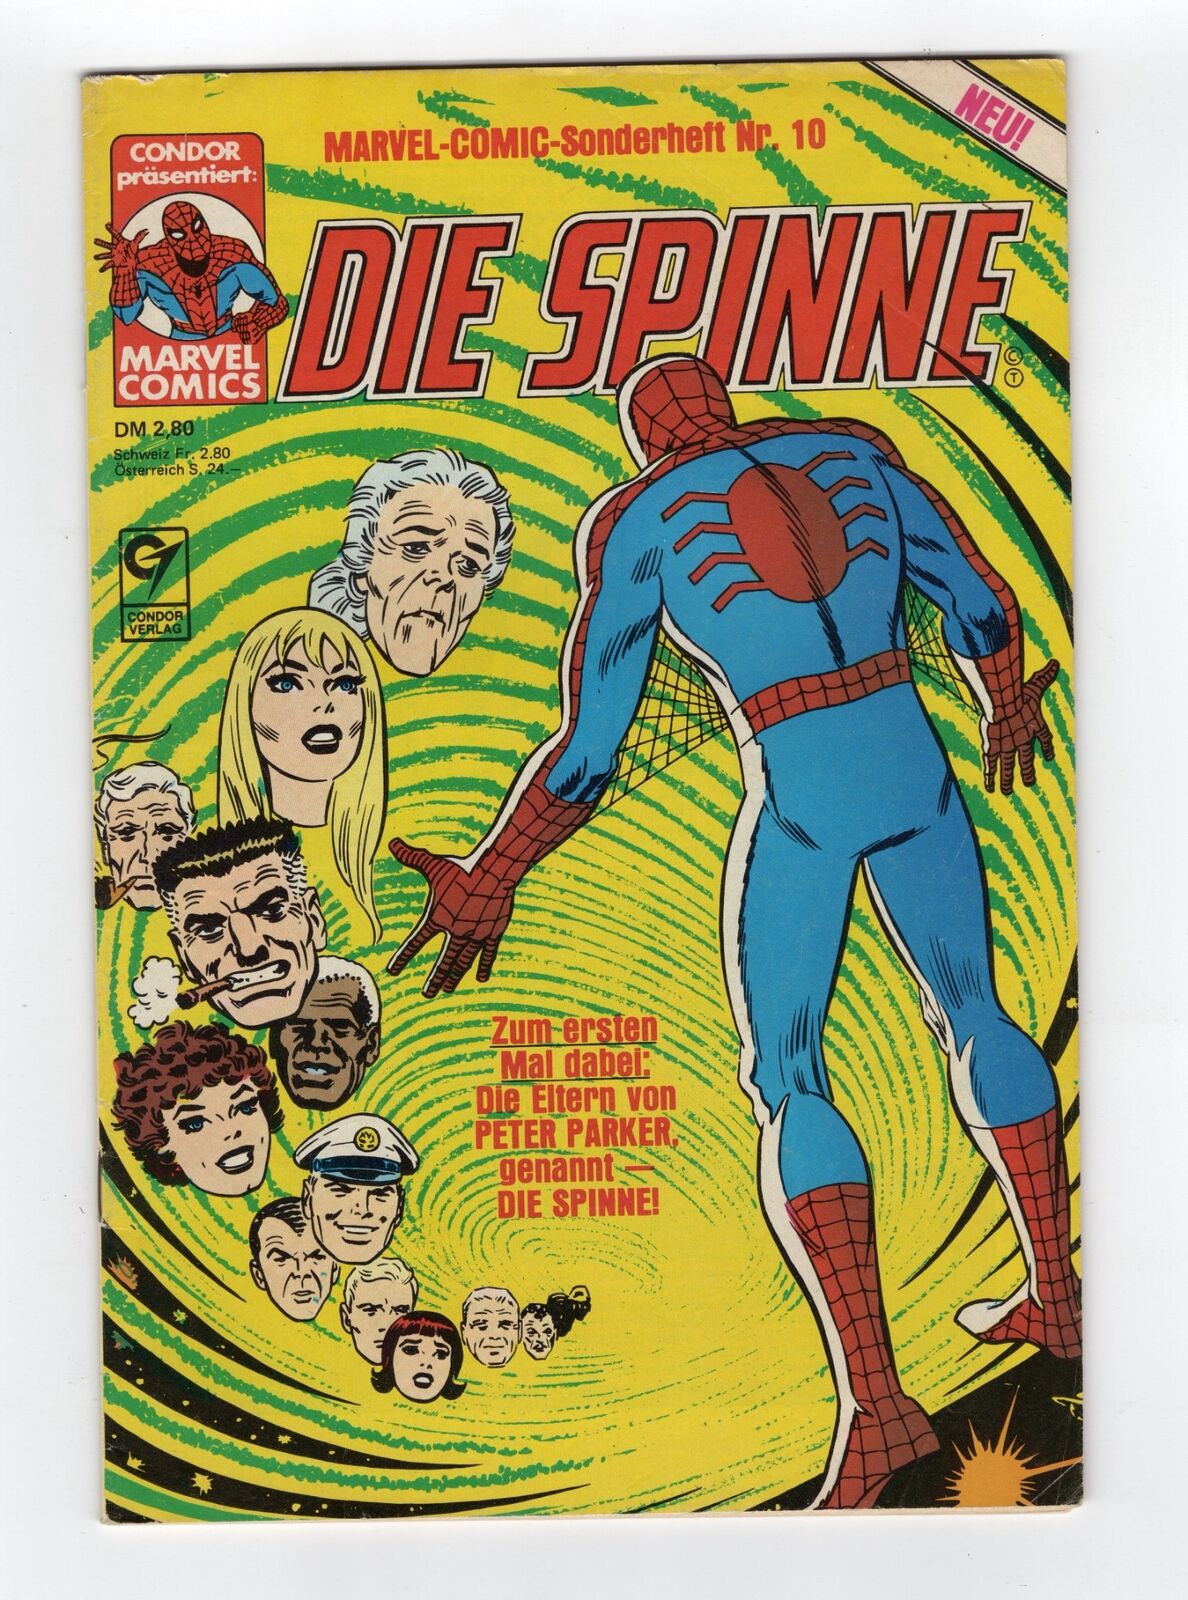 1968 MARVEL AMAZING SPIDER-MAN ANNUAL #5 1ST APP PETERS PARENTS KEY RARE GERMAN